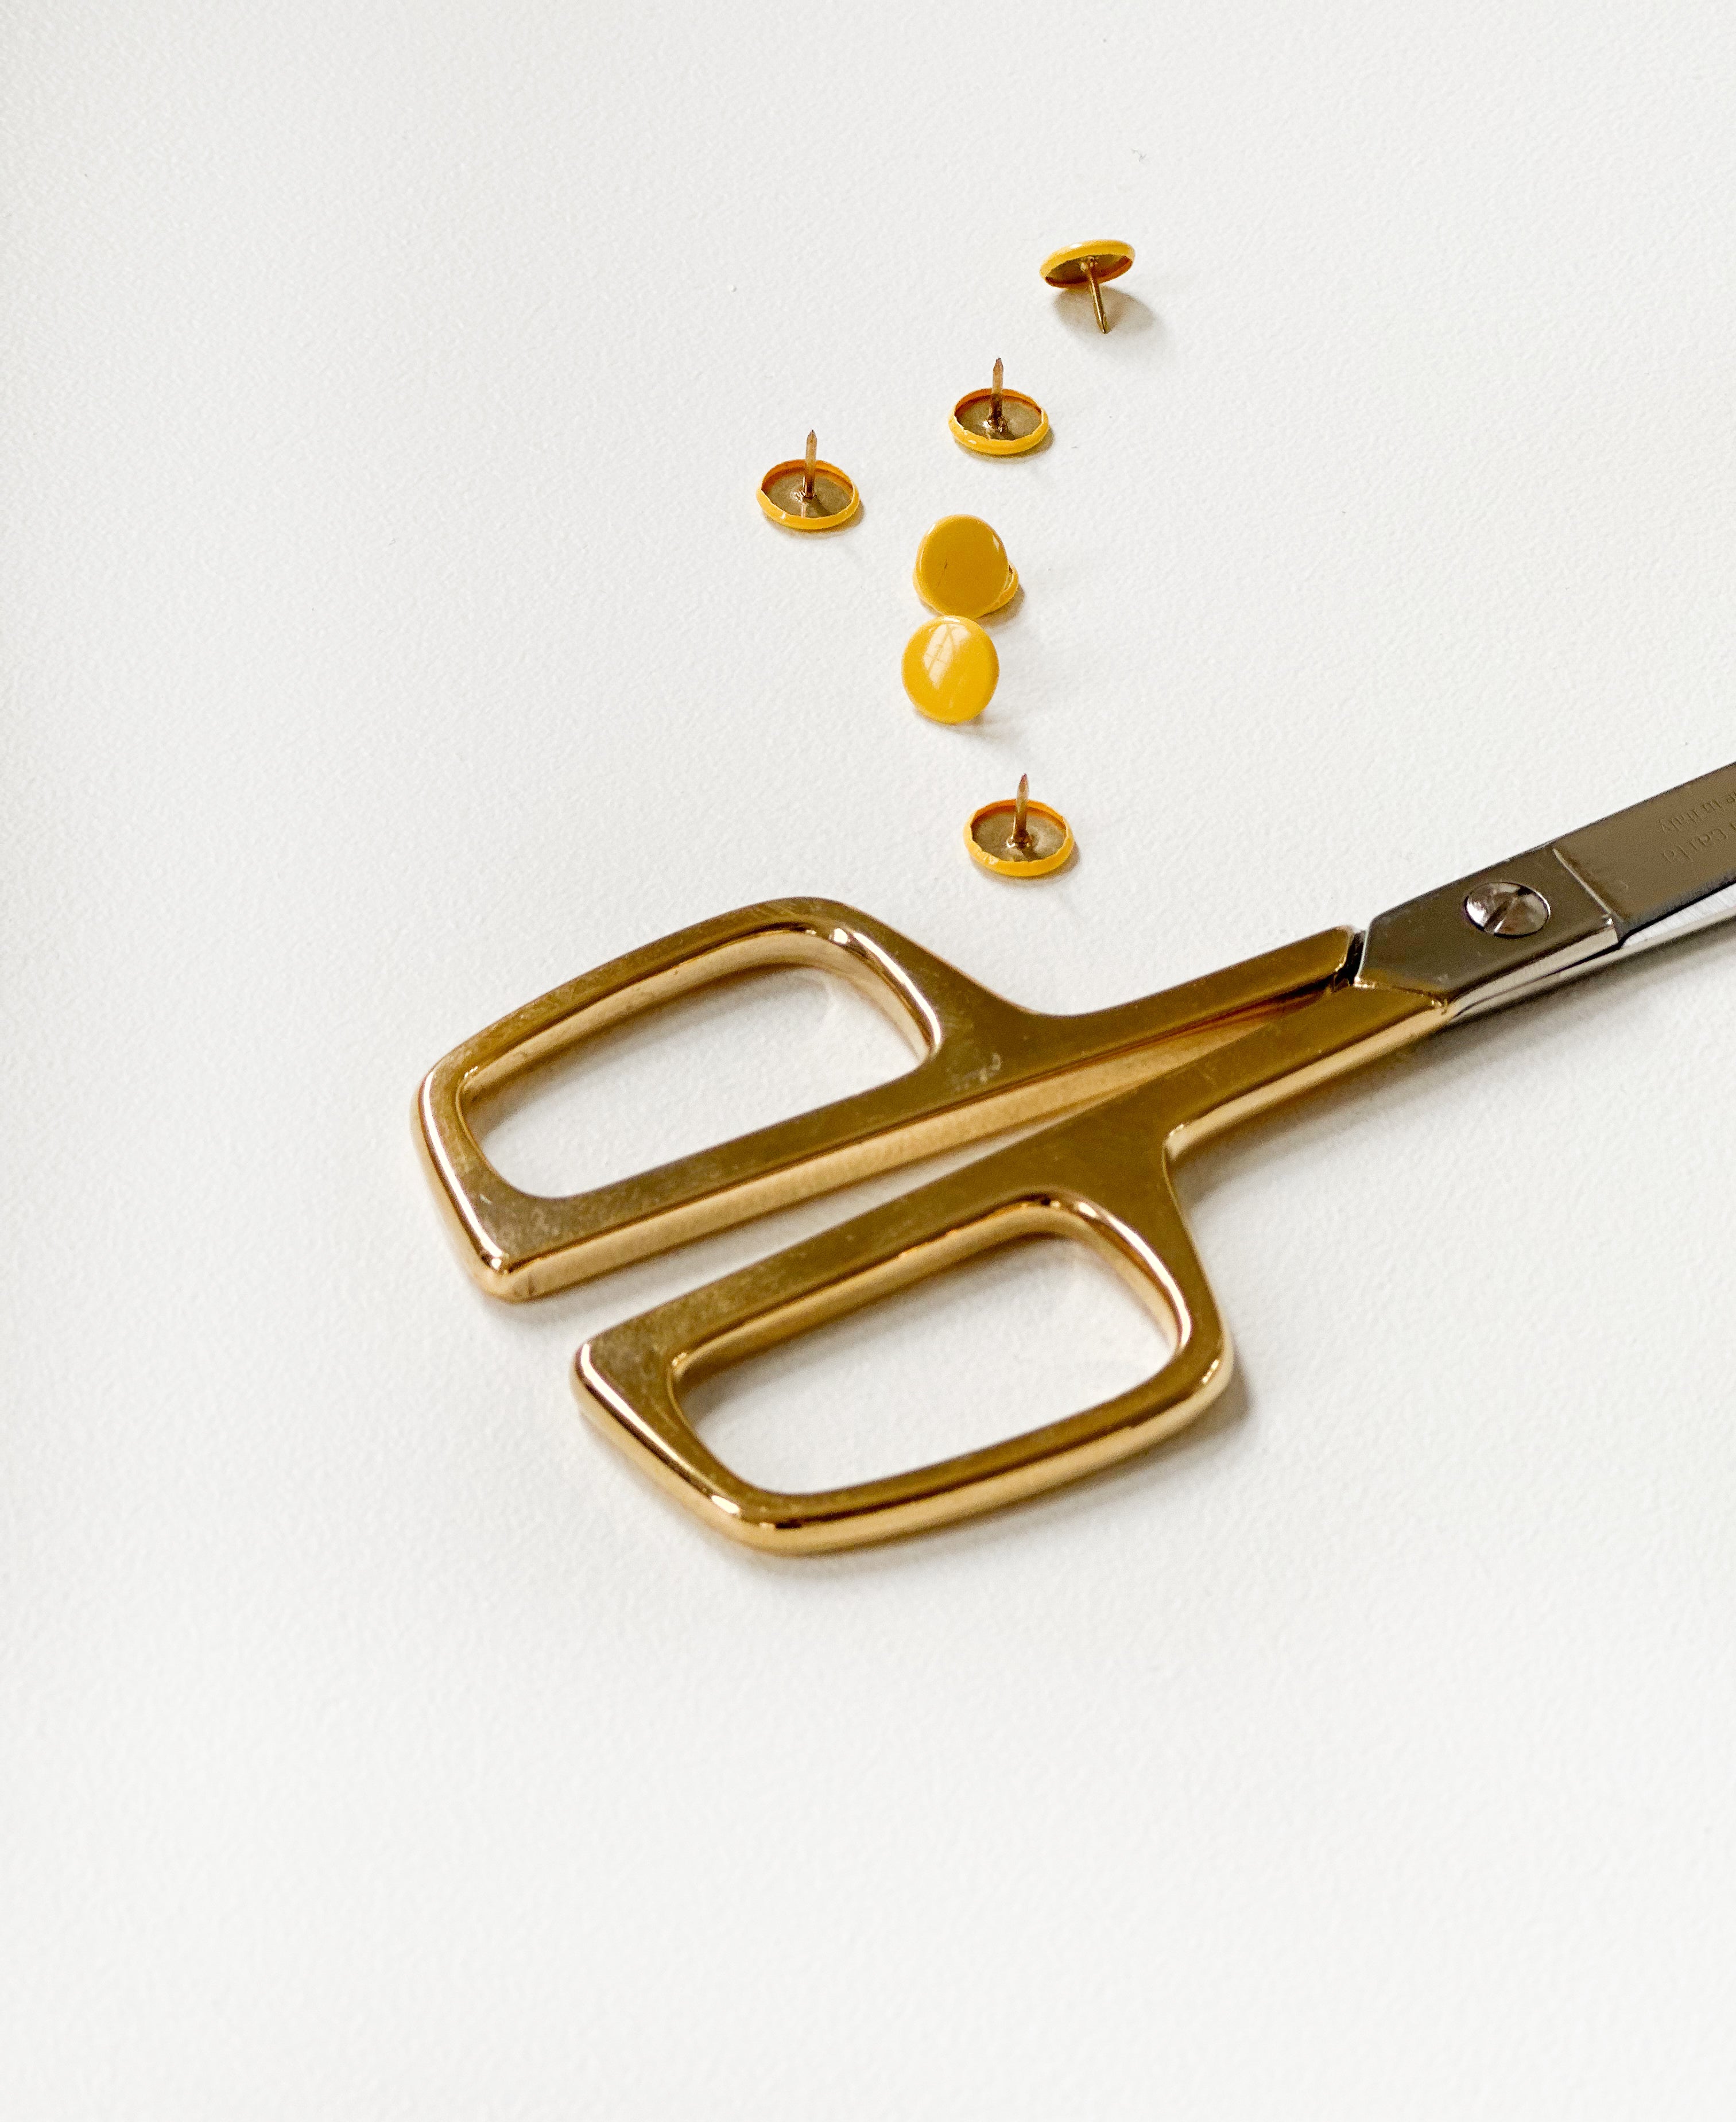 Gold Acrylic Scissors Transparent Metal Scissors office accessories